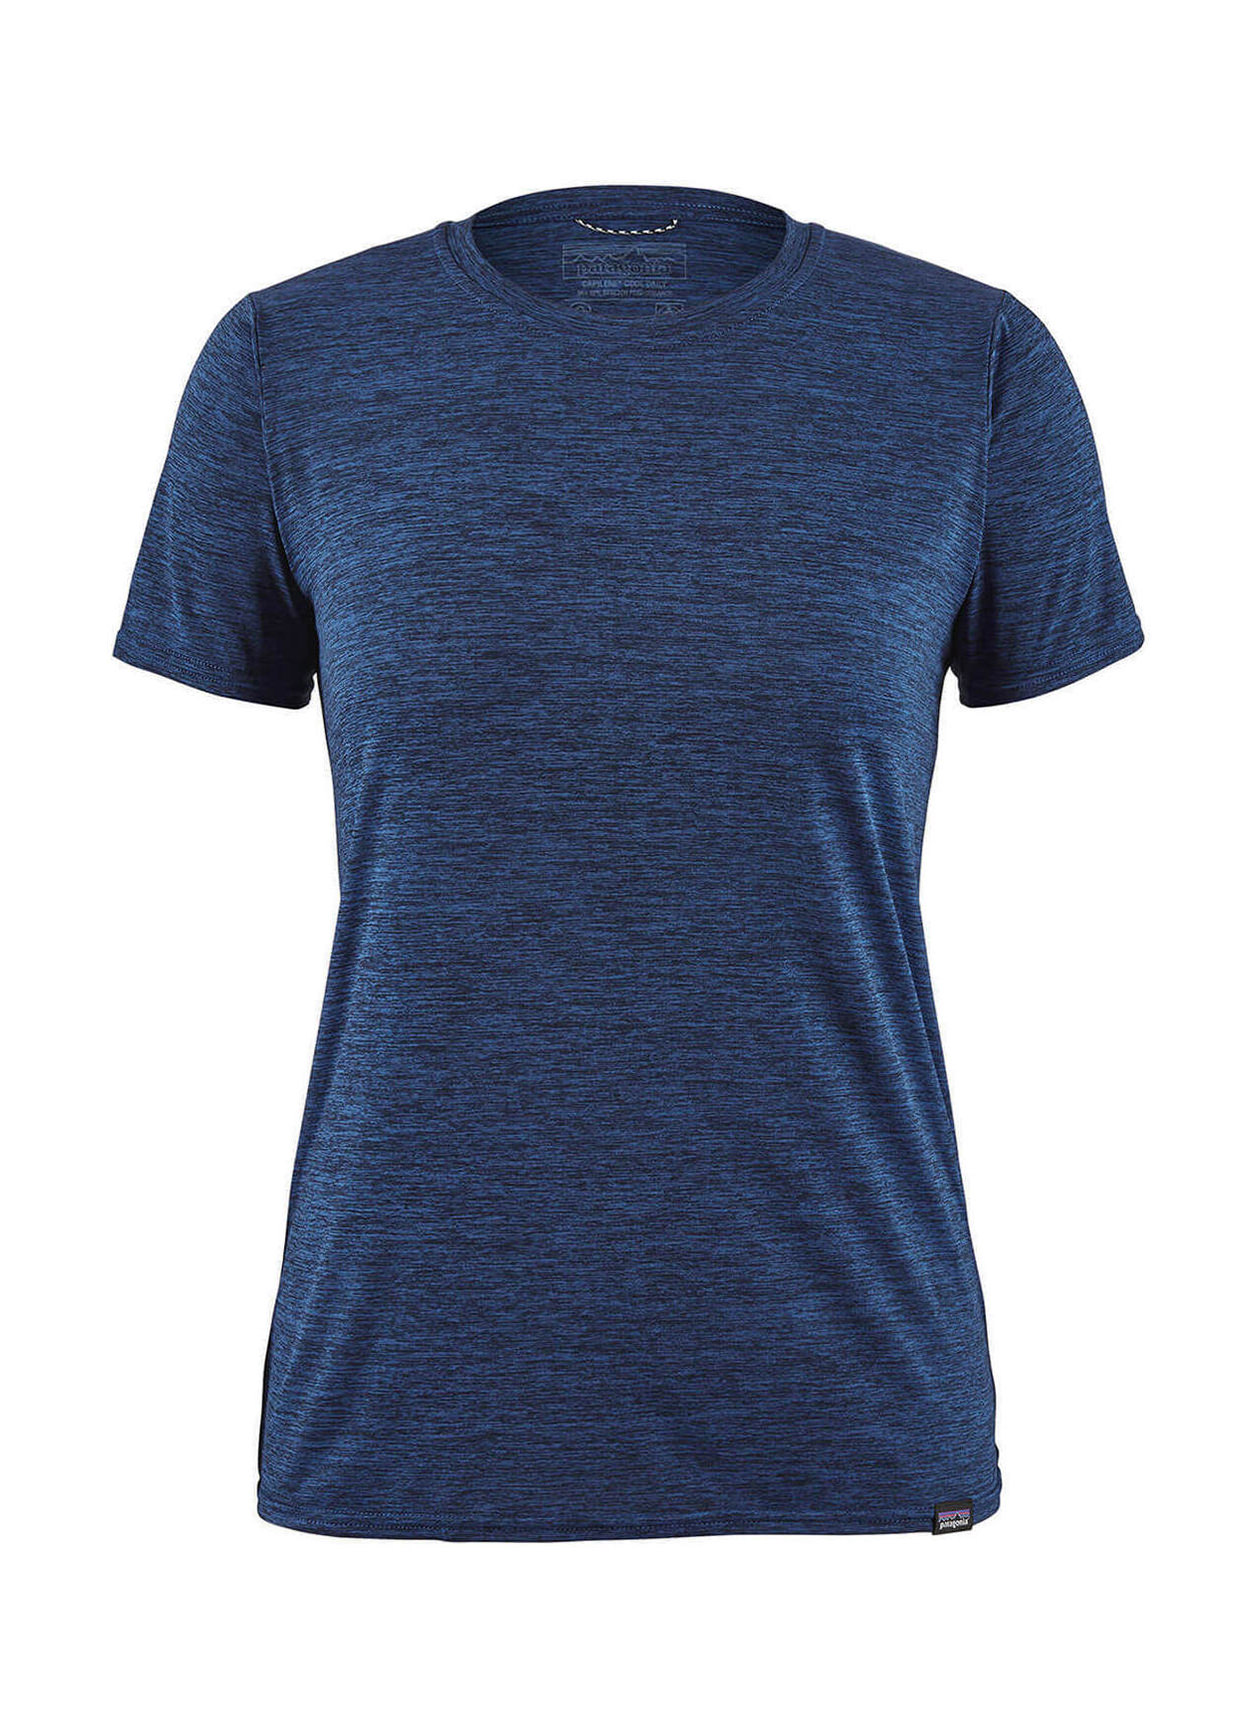 Patagonia Women's Viking Blue / Navy Blue Cap Cool Daily T-Shirt